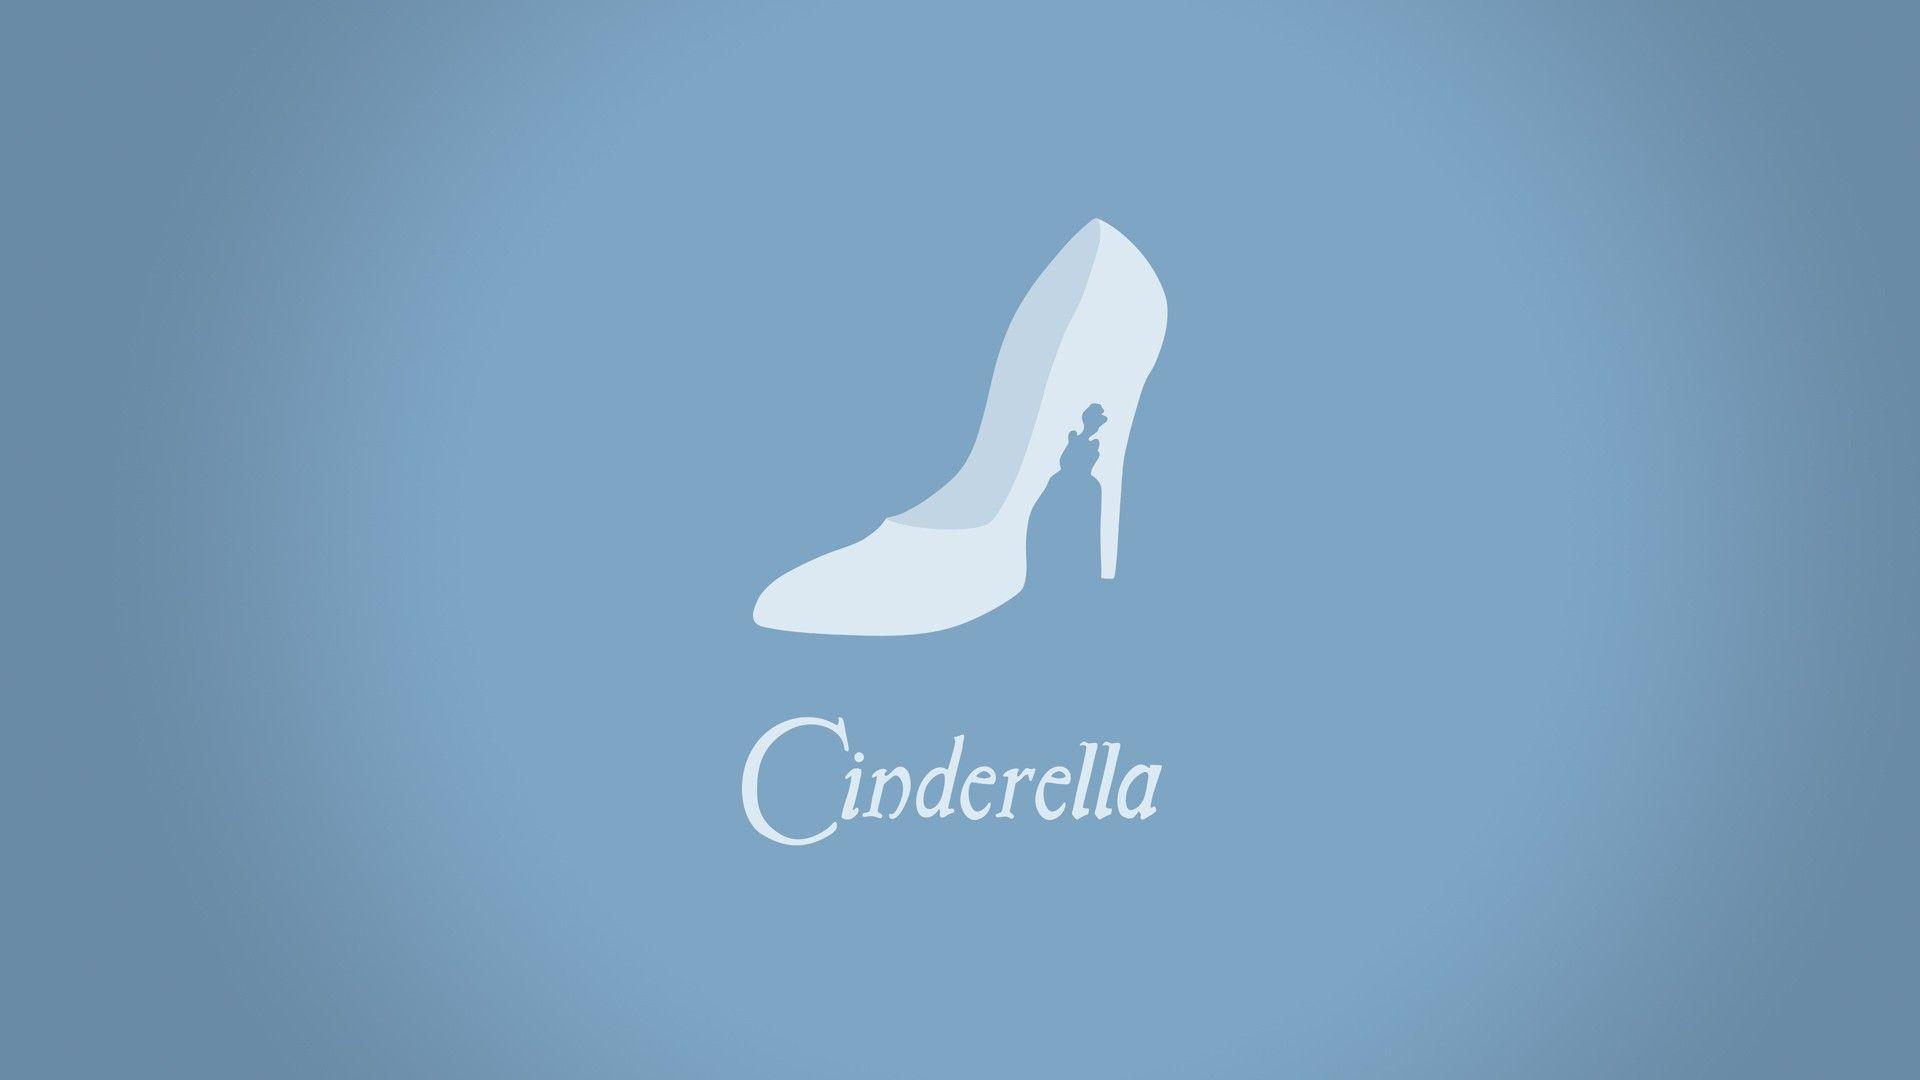 Wallpaper.wiki Cinderella Background HD PIC WPD003632